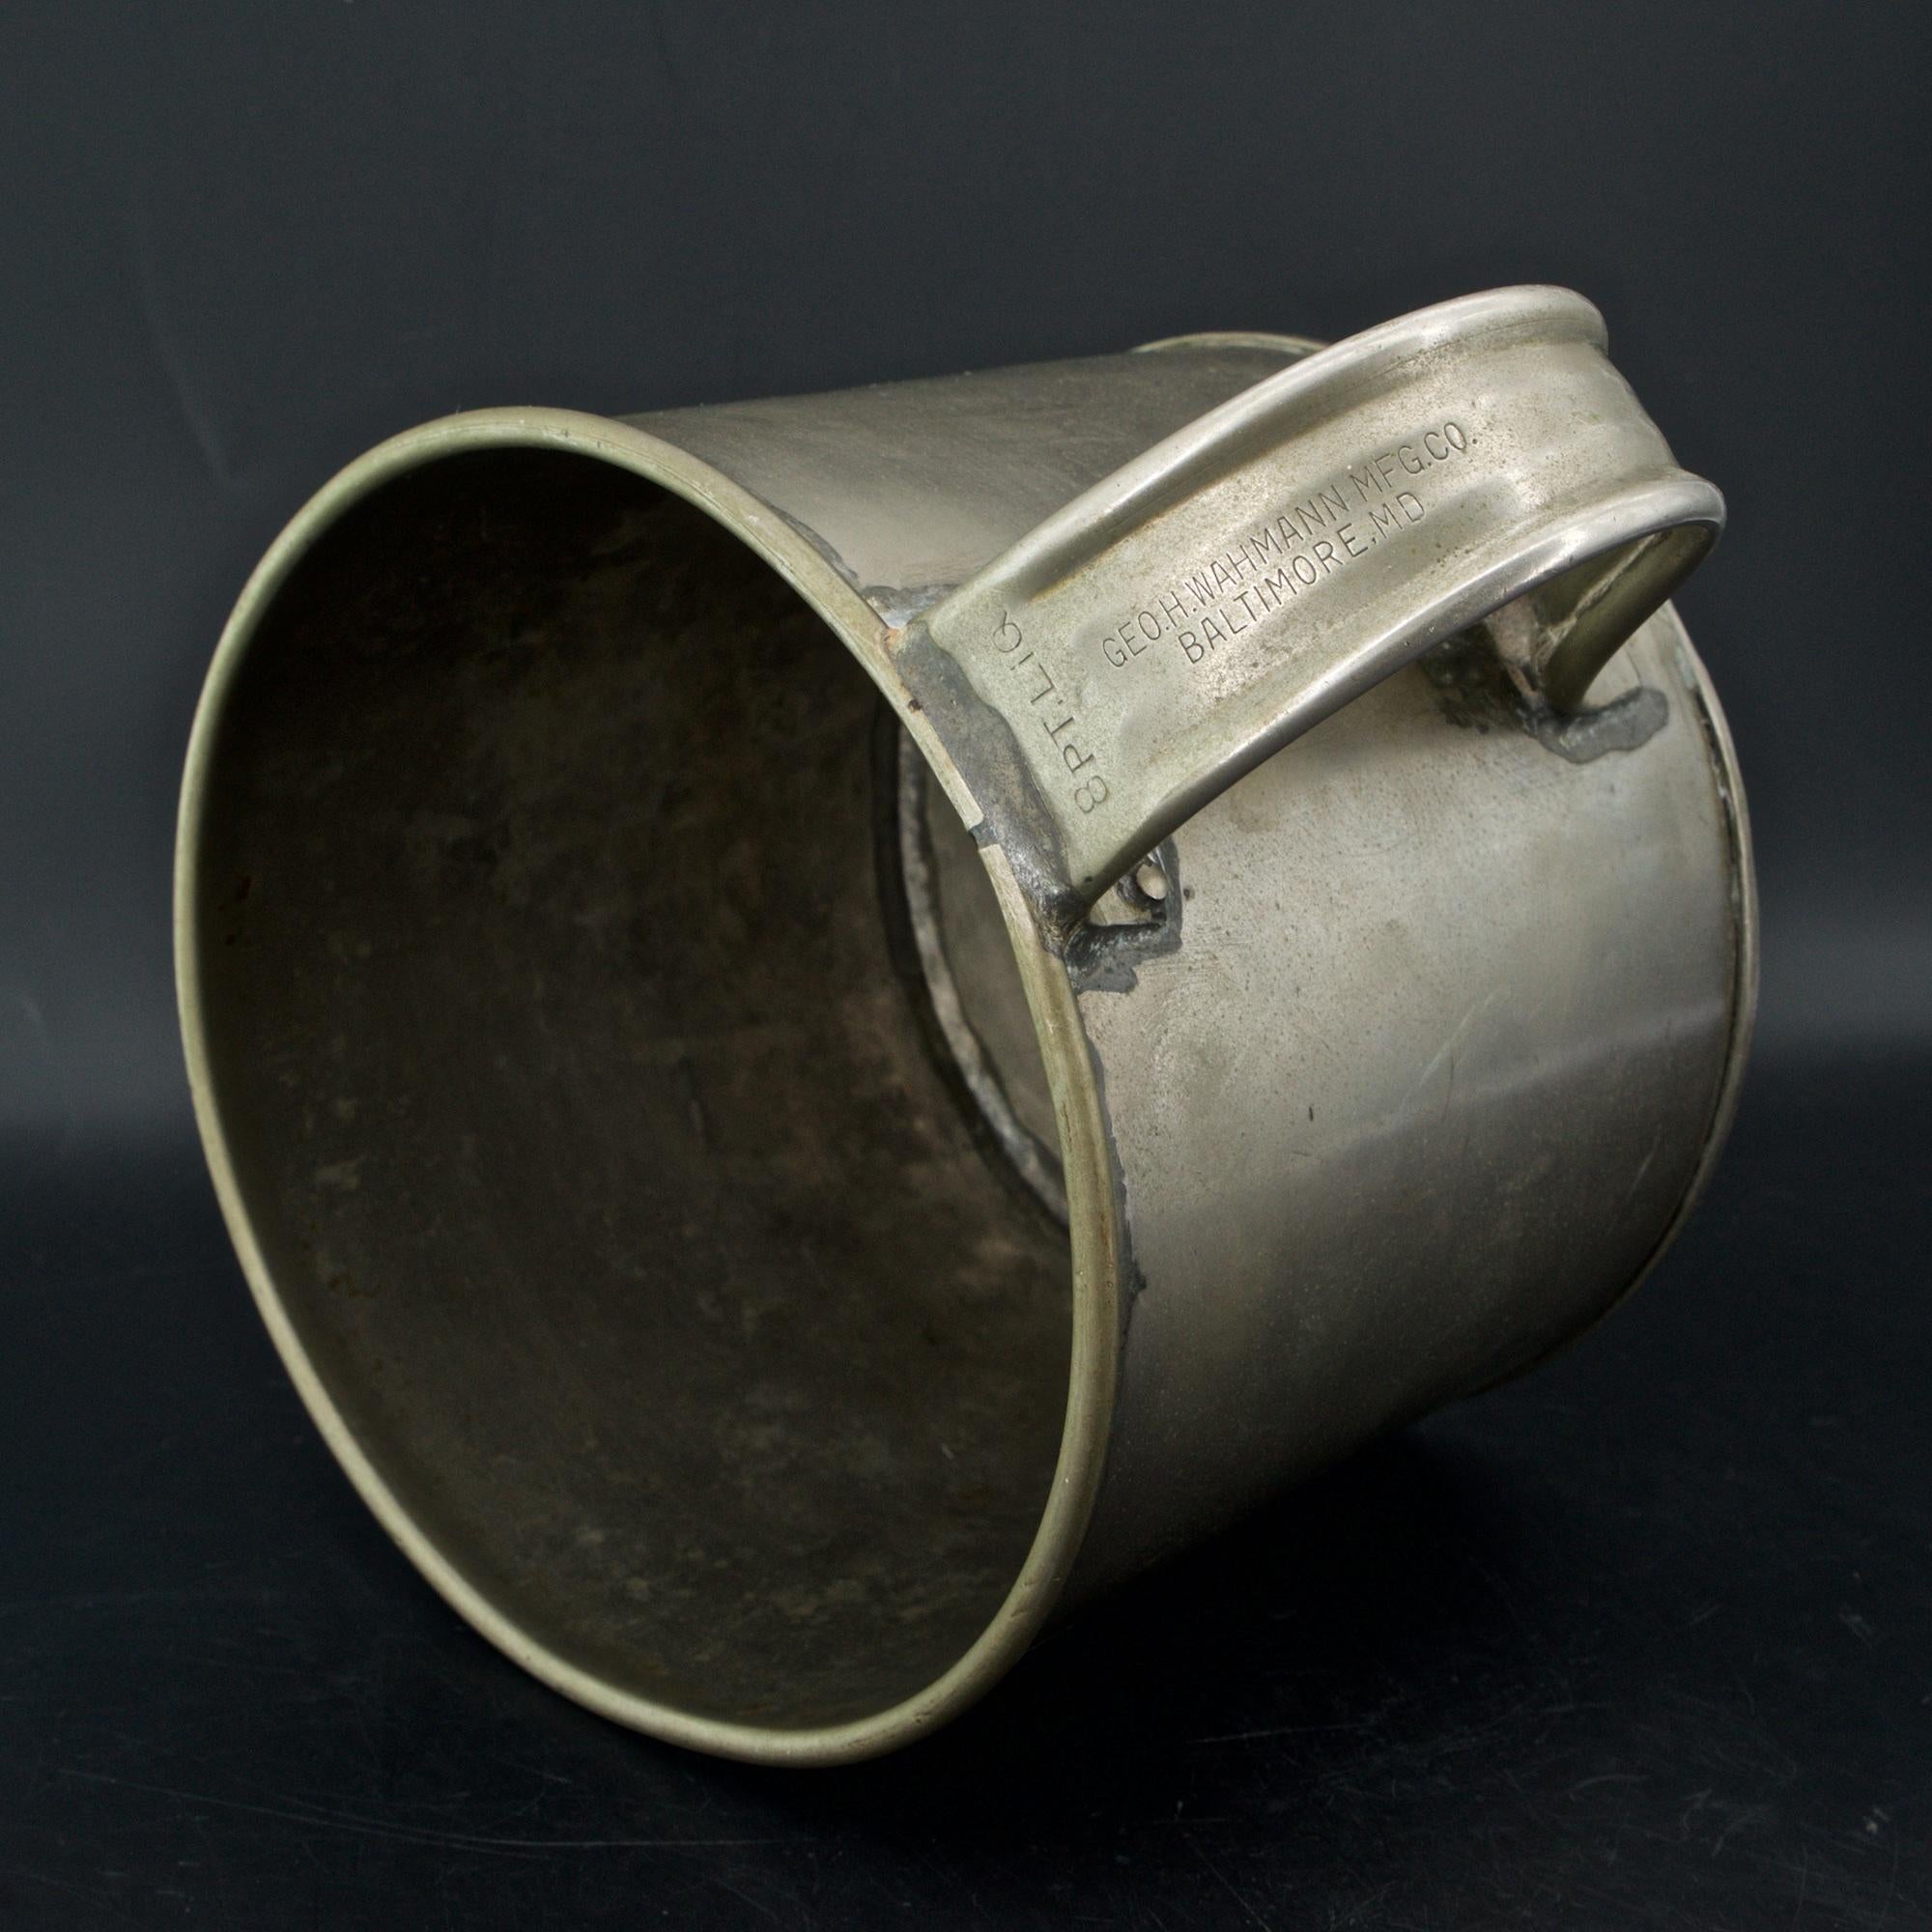 An rare gallon cup for shucked Oyster measurement. Marks: 8 PT. LIQ. GEO. H. WAHMANN MFG. CO. BALTIMORE, M.D.